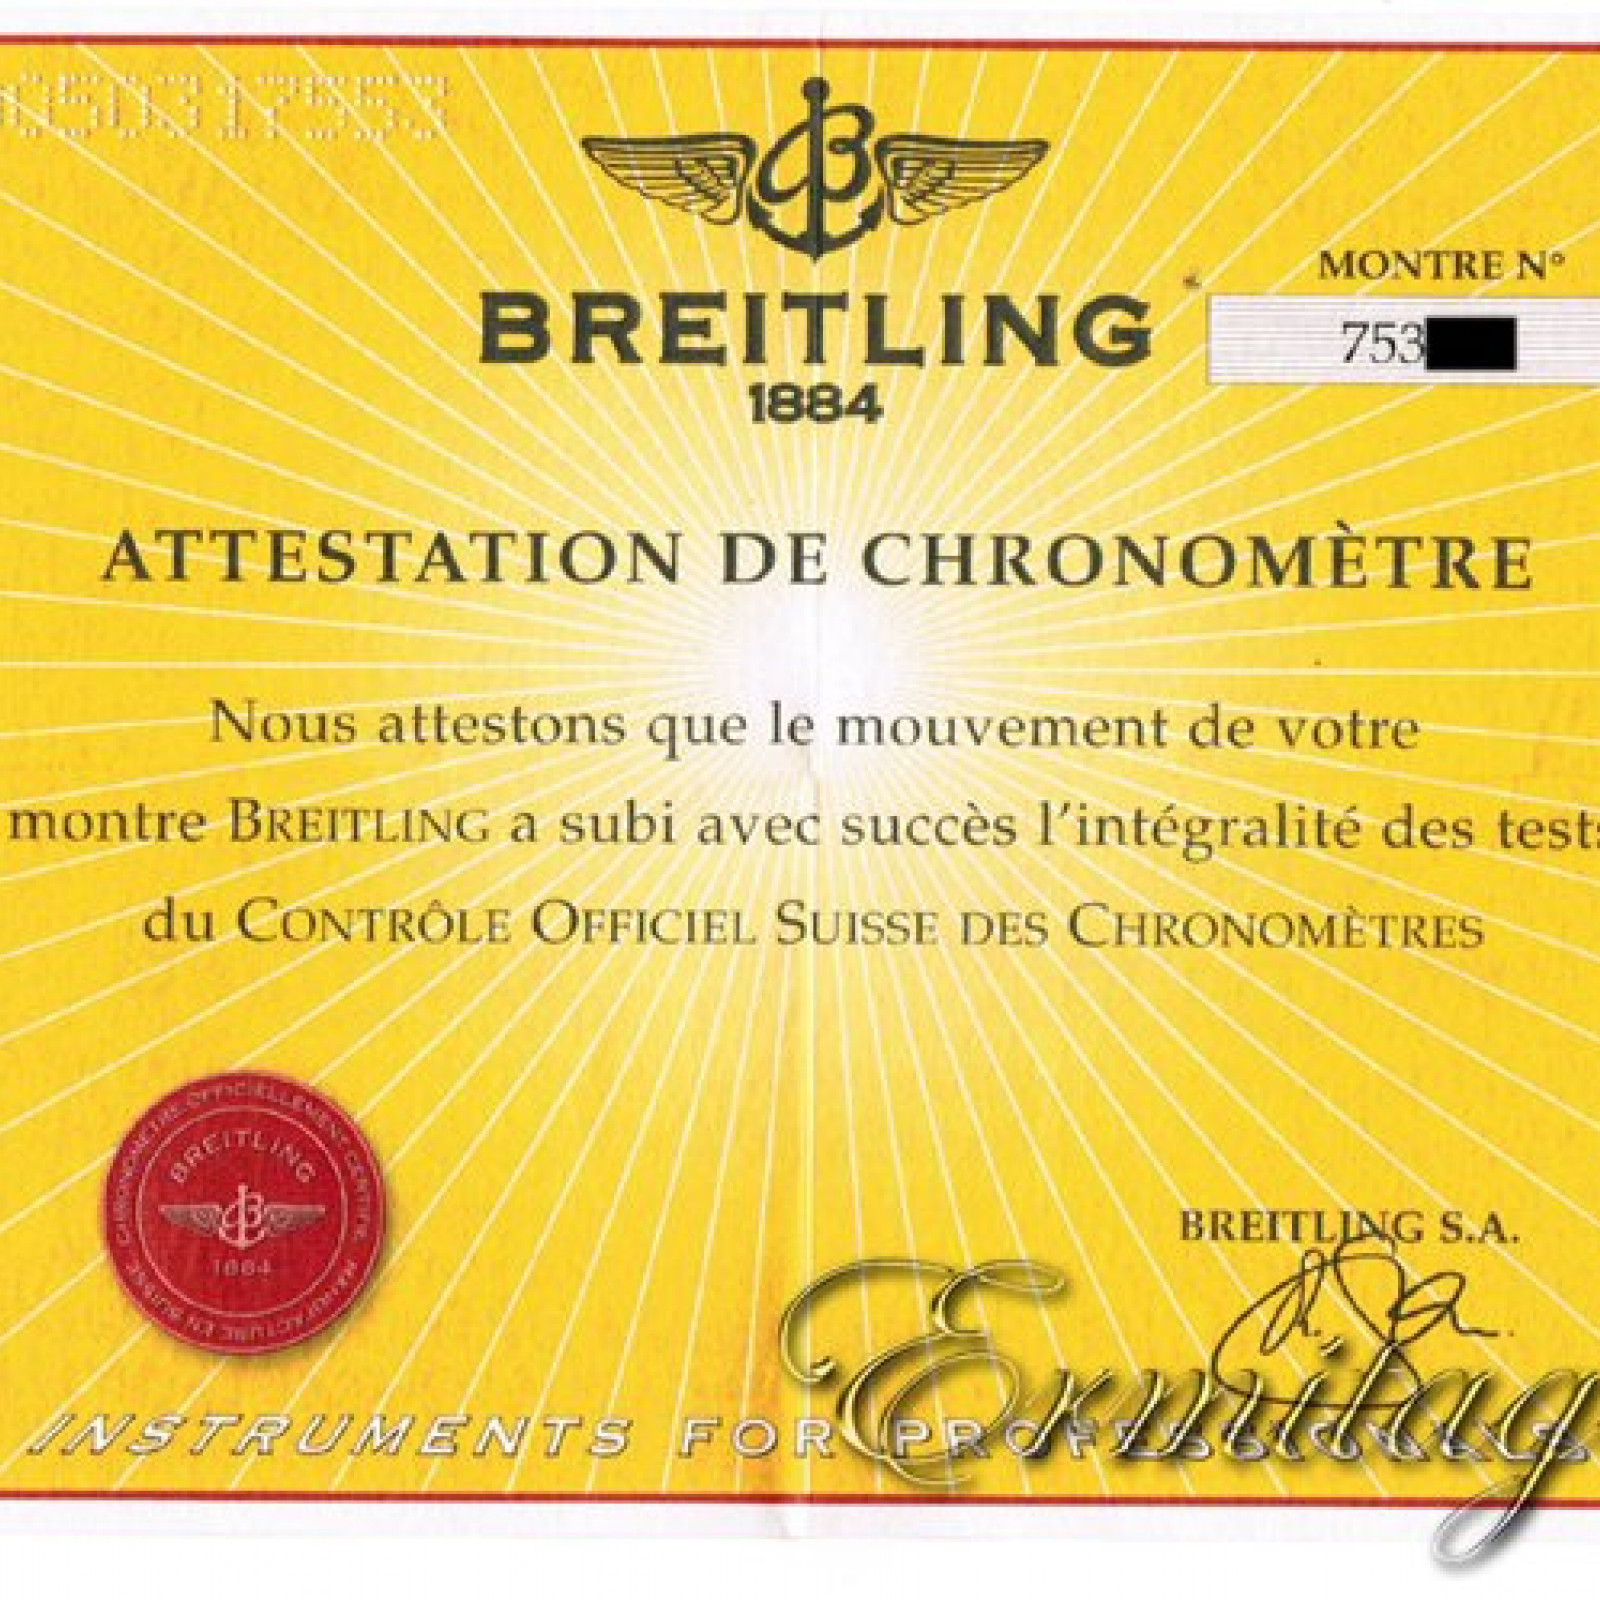 Breitling Emergency Mission A73321 Steel